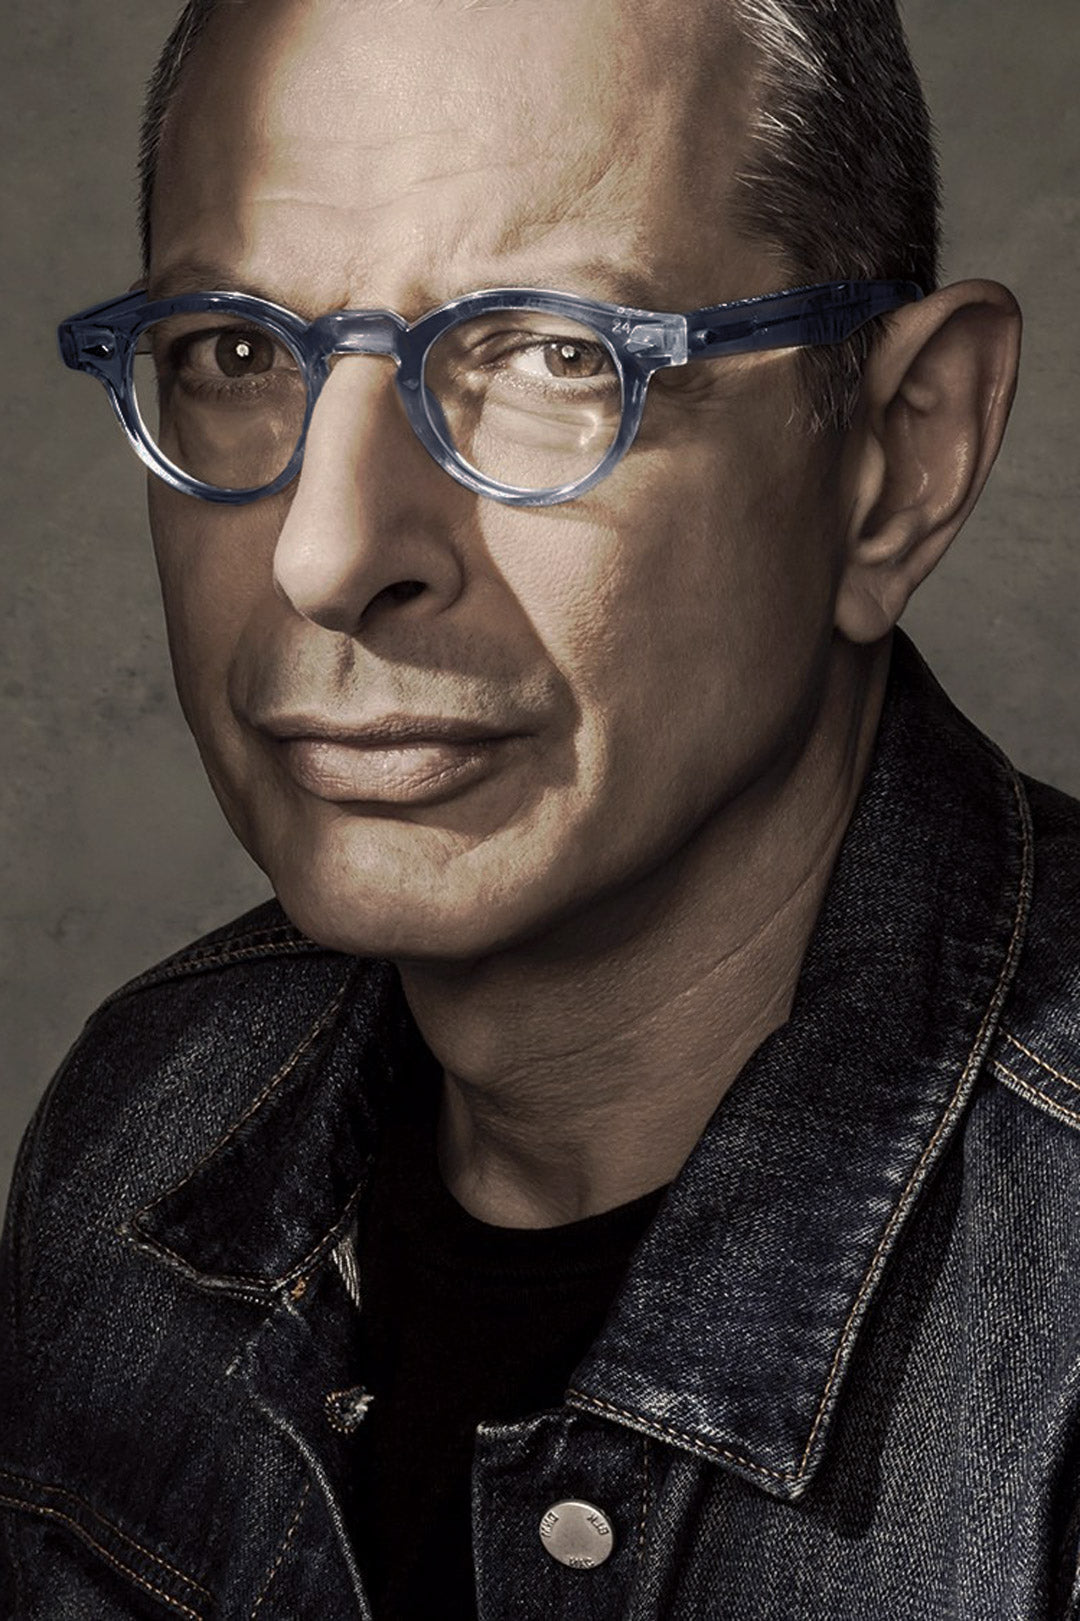 Mature-man-wearing-round-blue-eyeglasses-and-denim-jacket